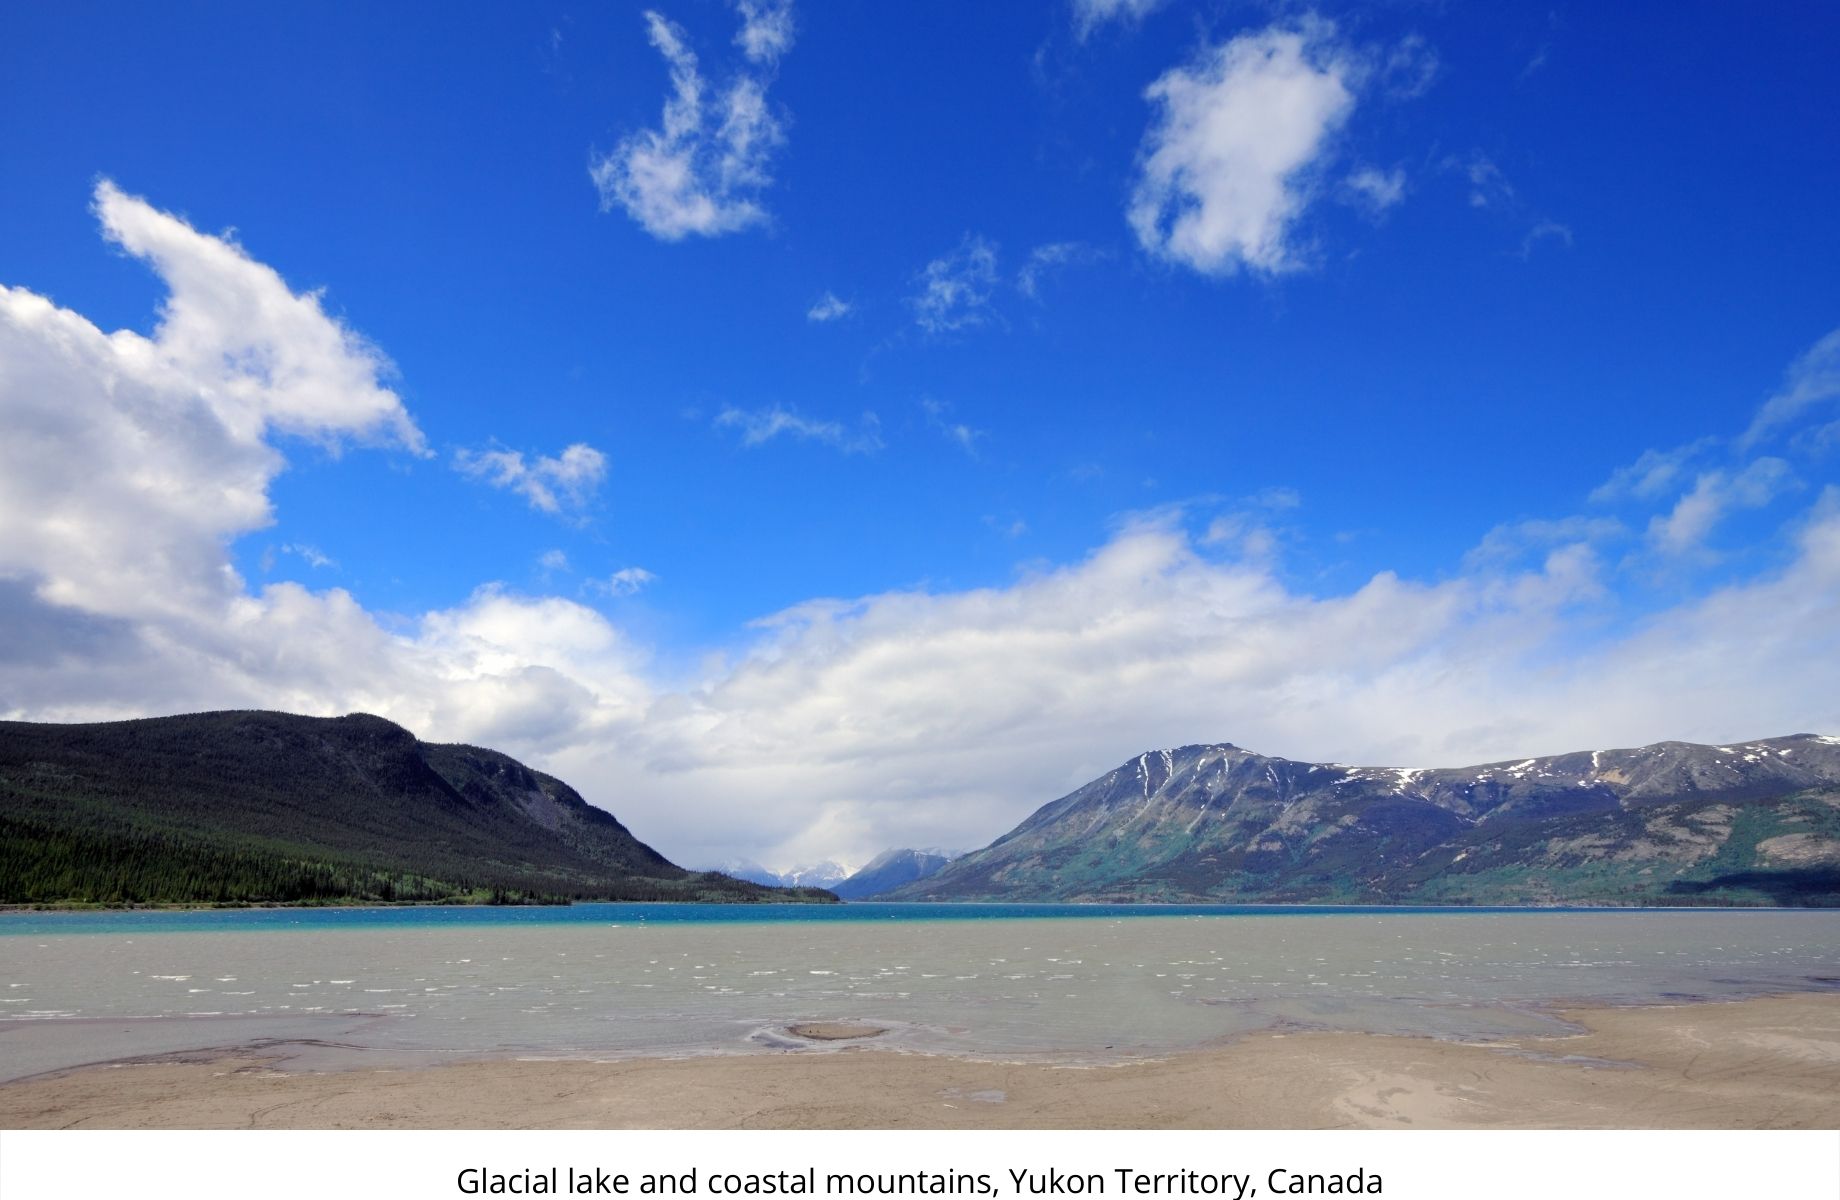 Glacial lake and coastal mountains, Yukon Territory, Canada